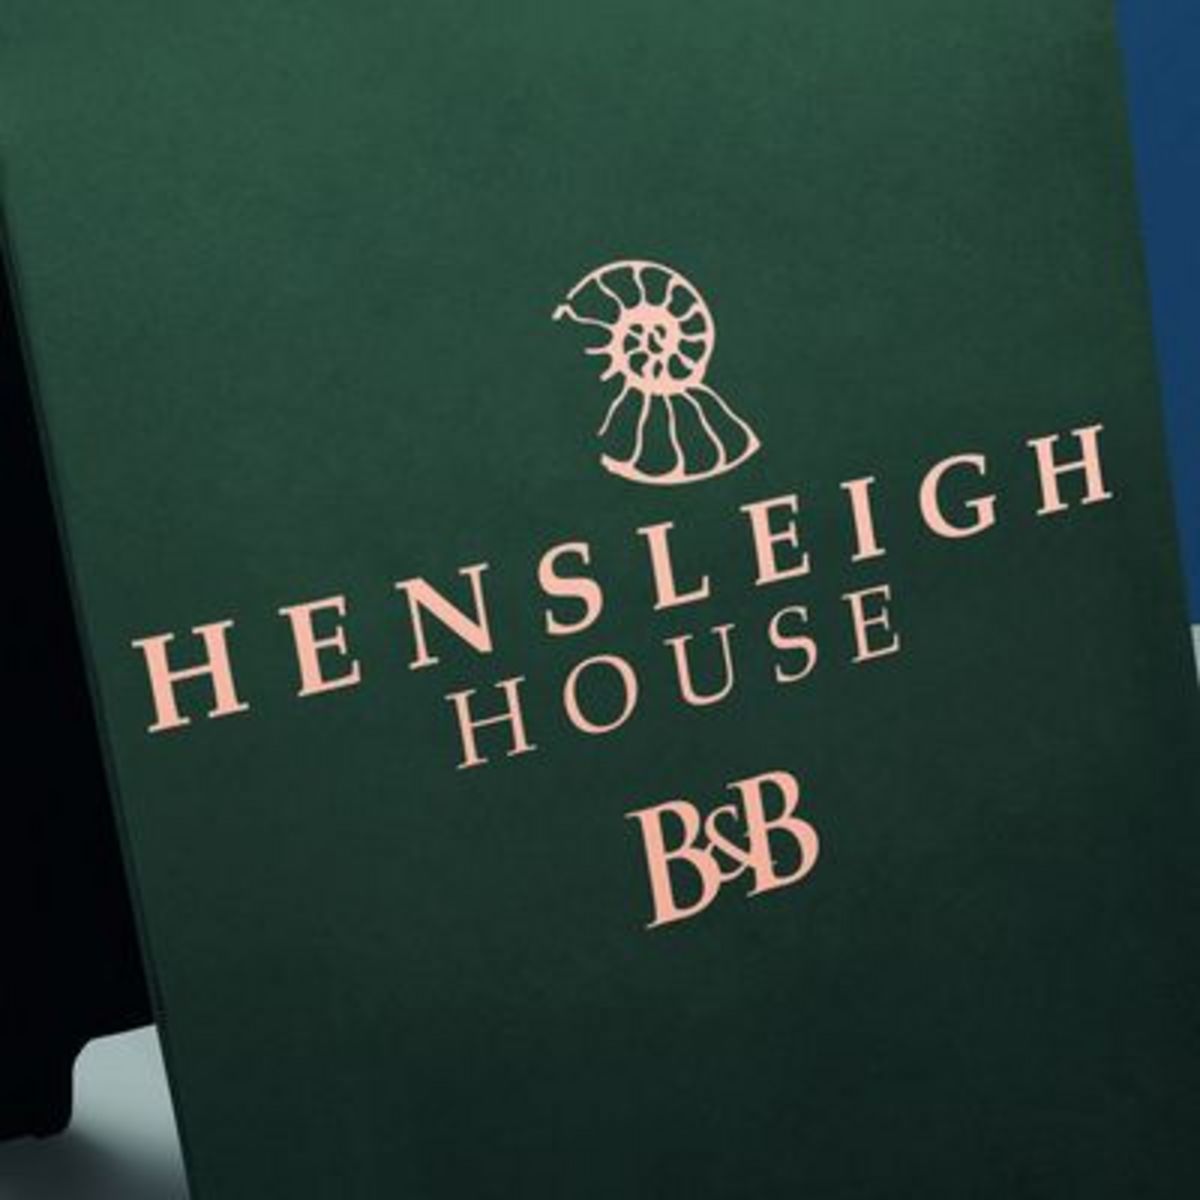 Logo Design Concepts for Hensleigh House in Print.jpg